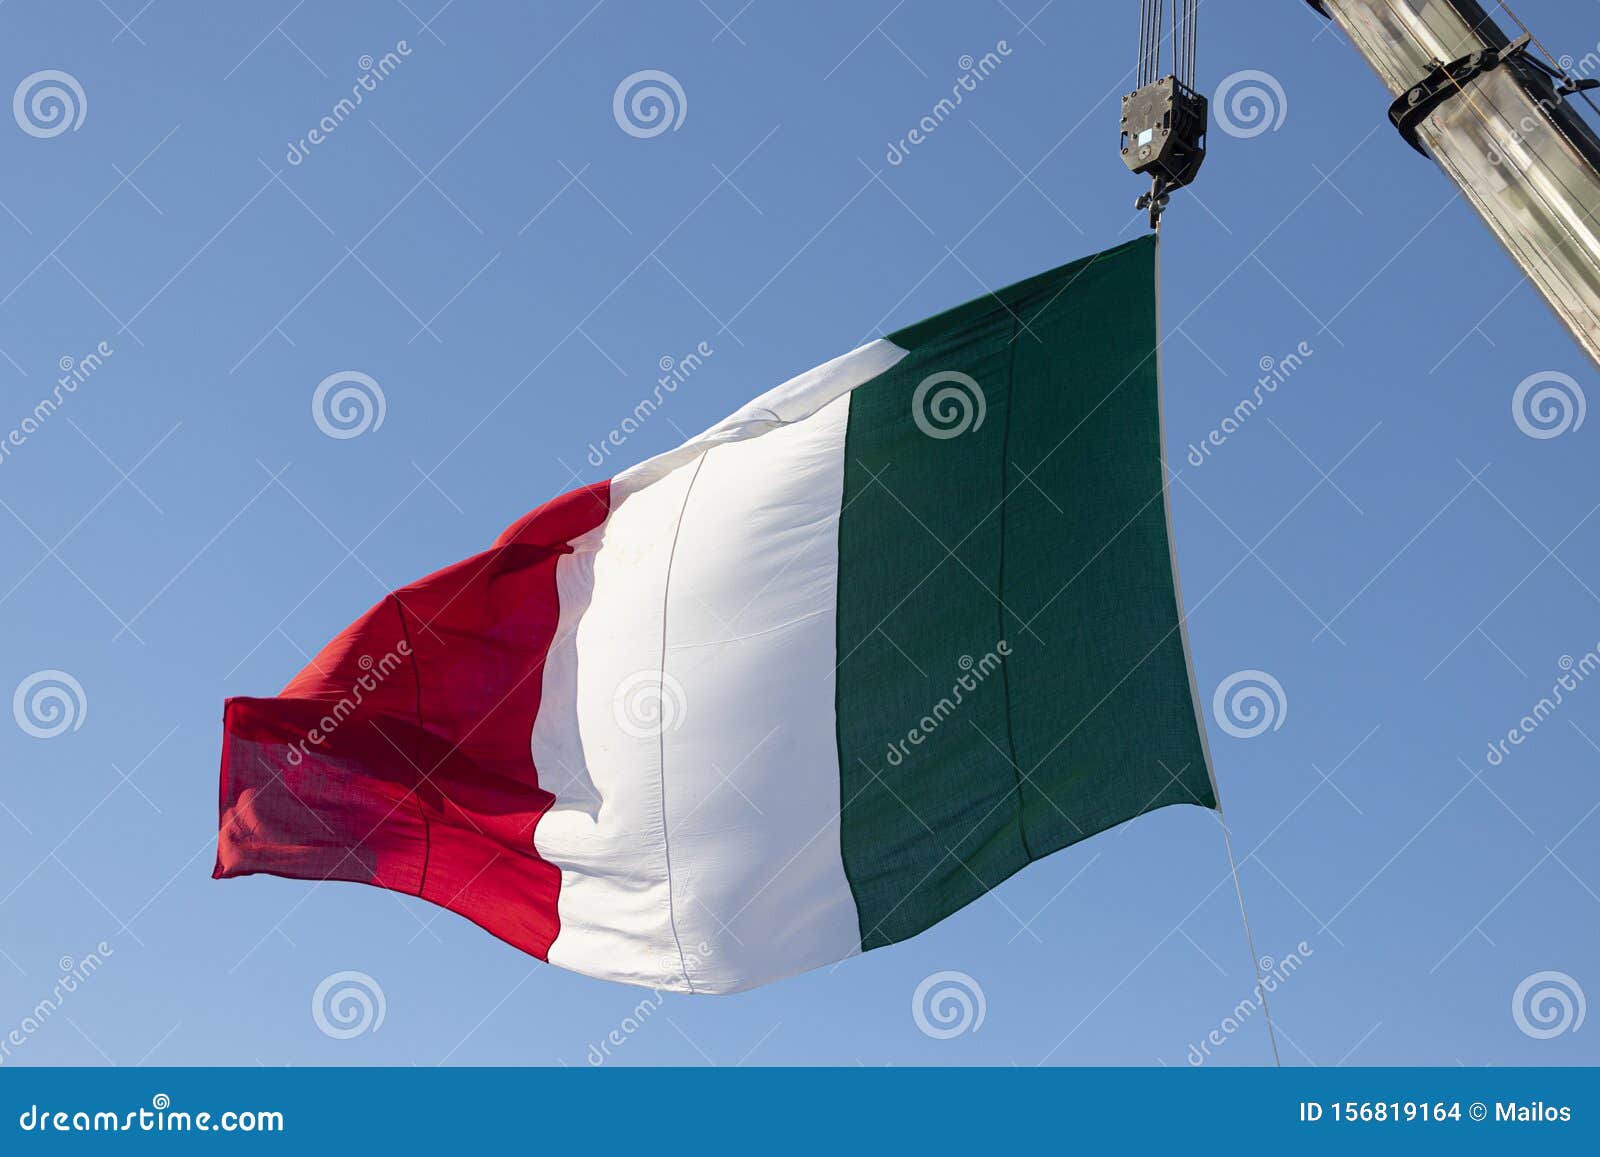 the national italian flag of italy it